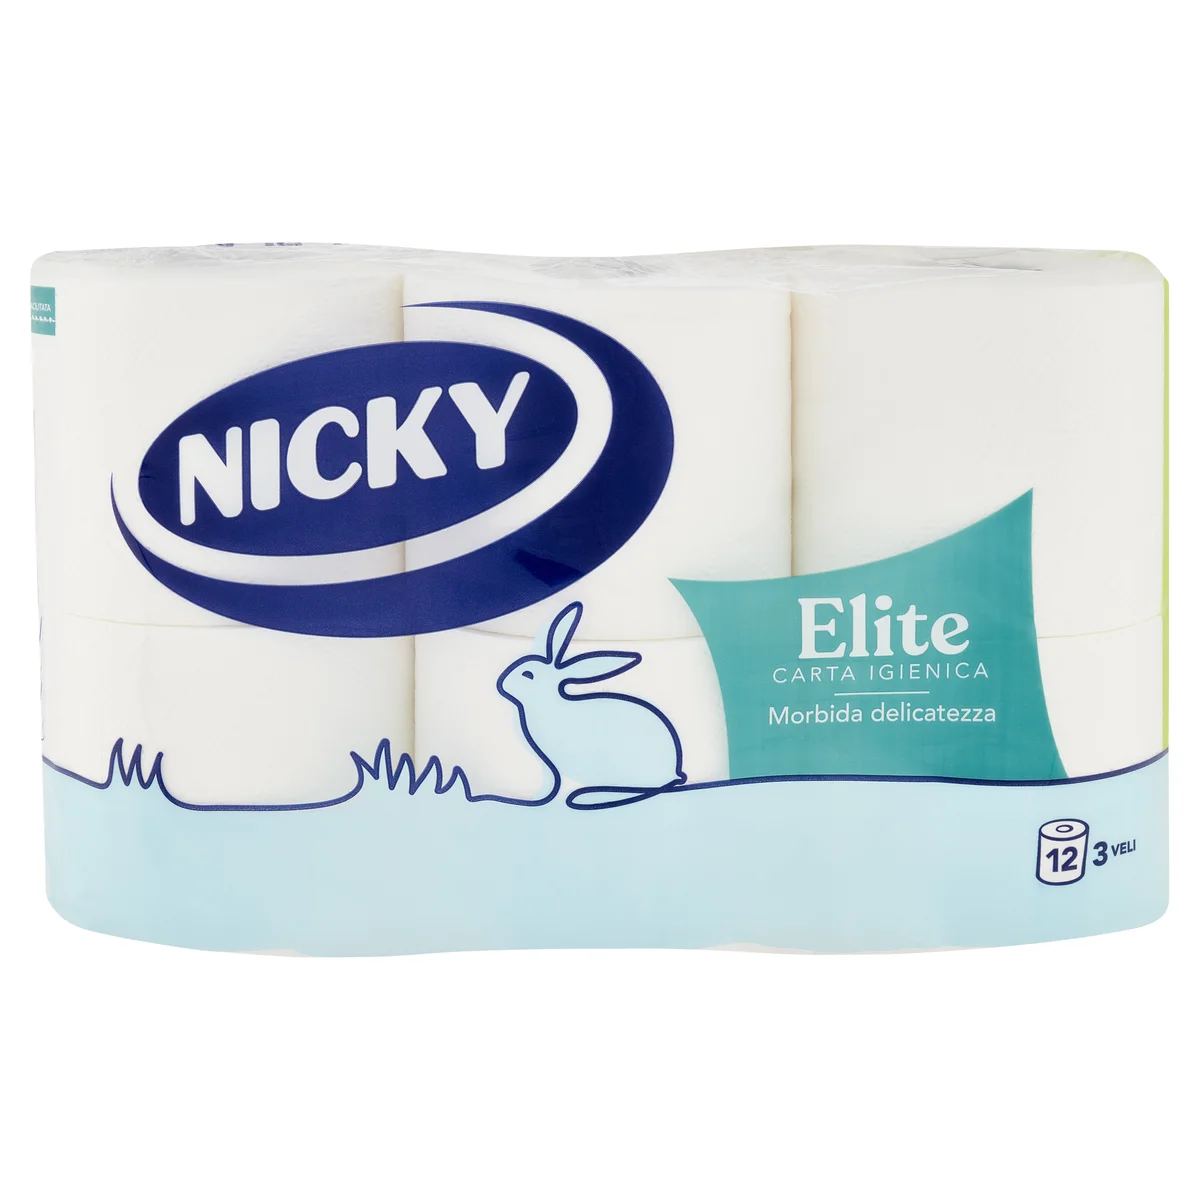 Nicky Elite Carta Igienica 12 pz